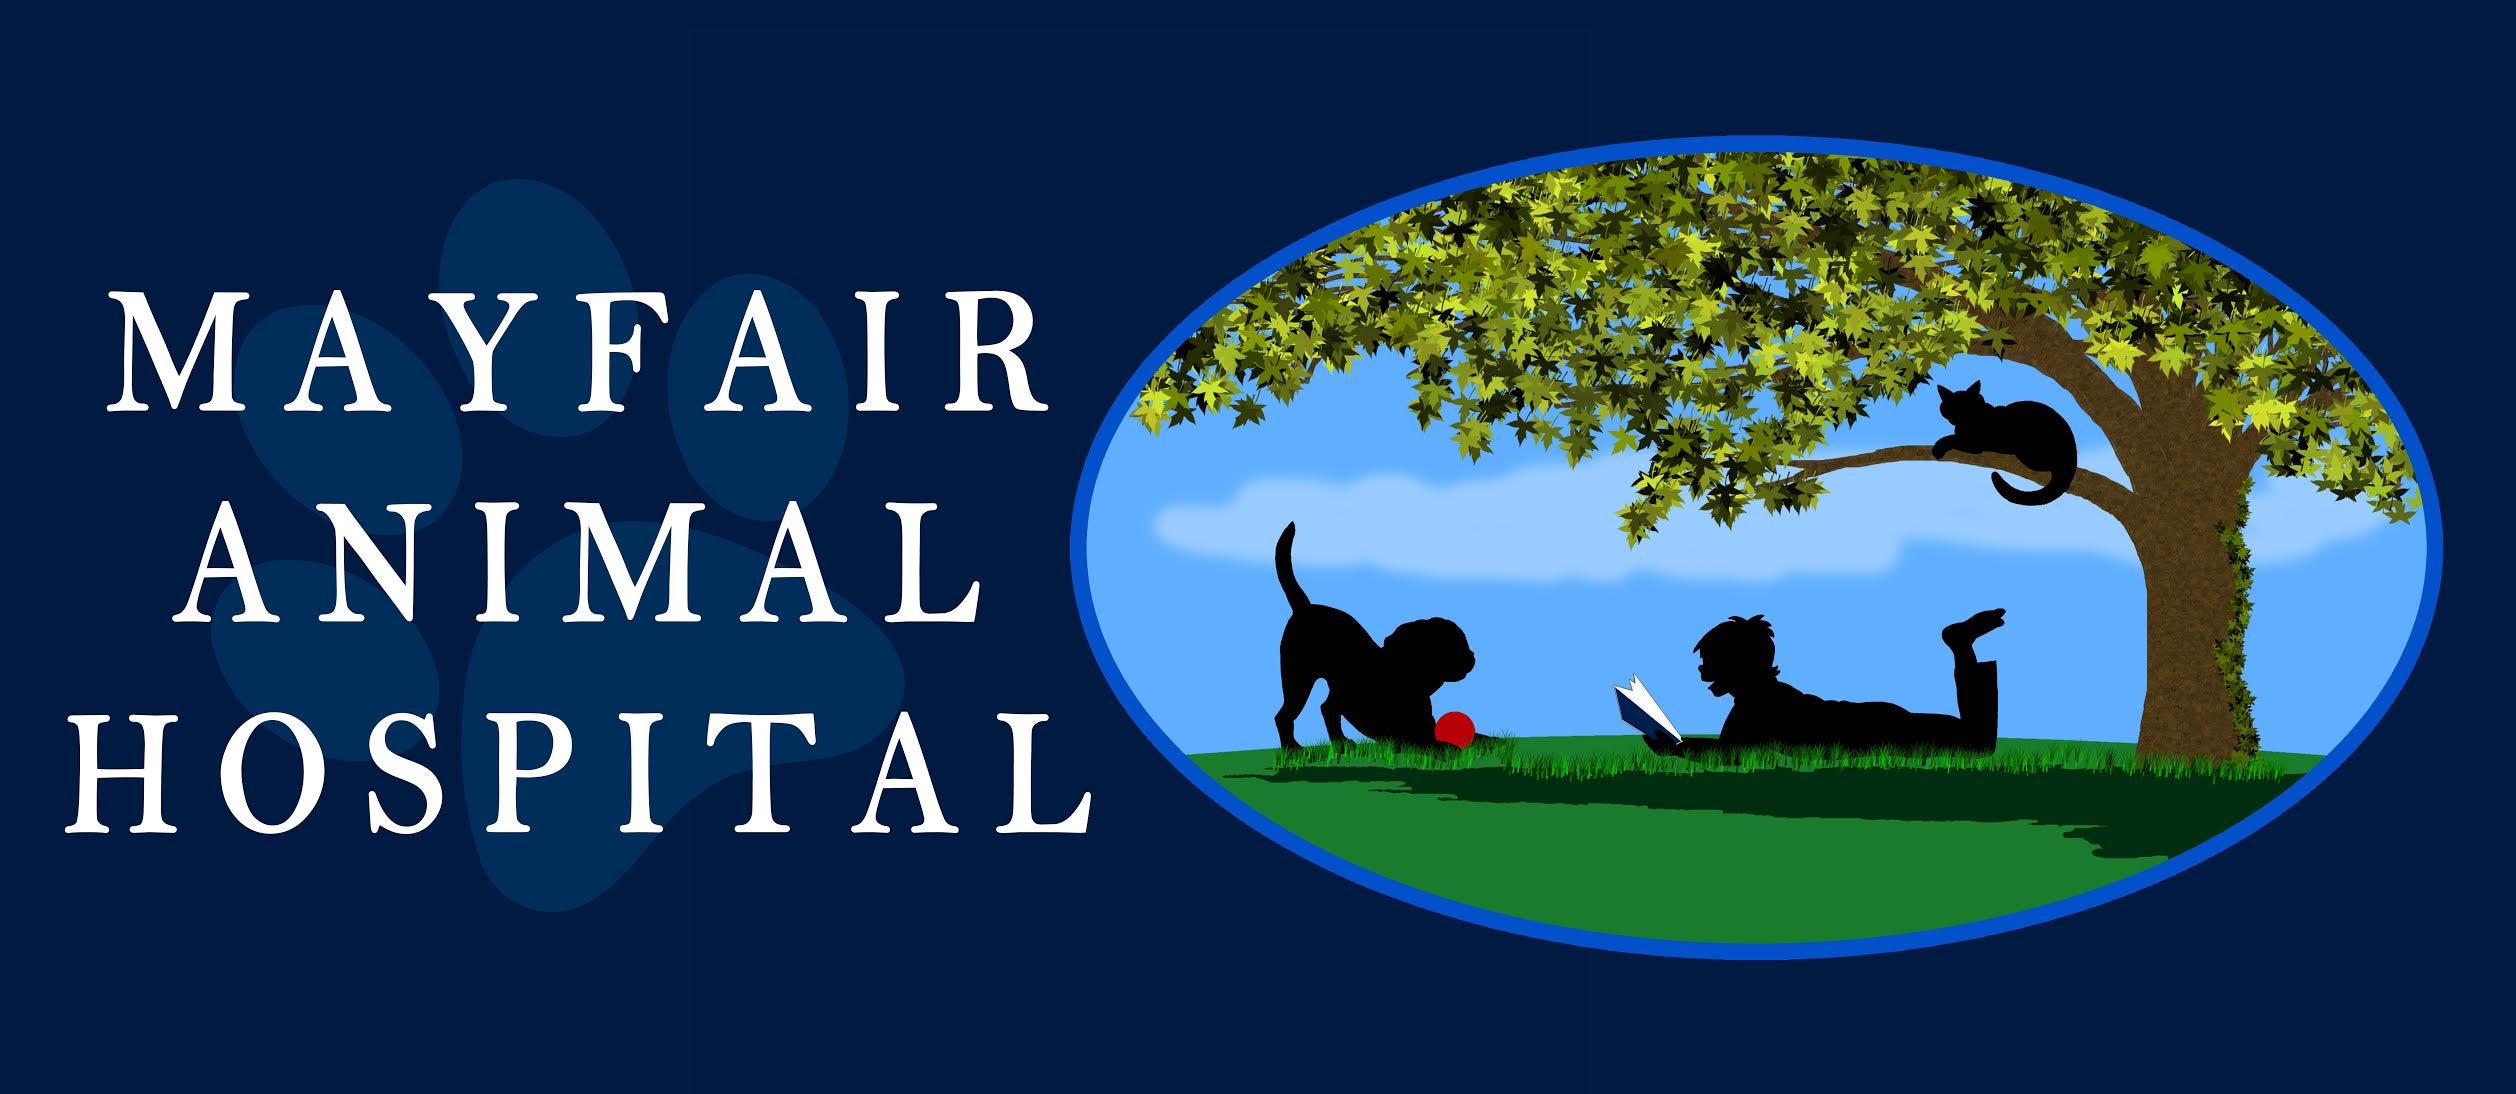 Mayfair Animal Hospital logo